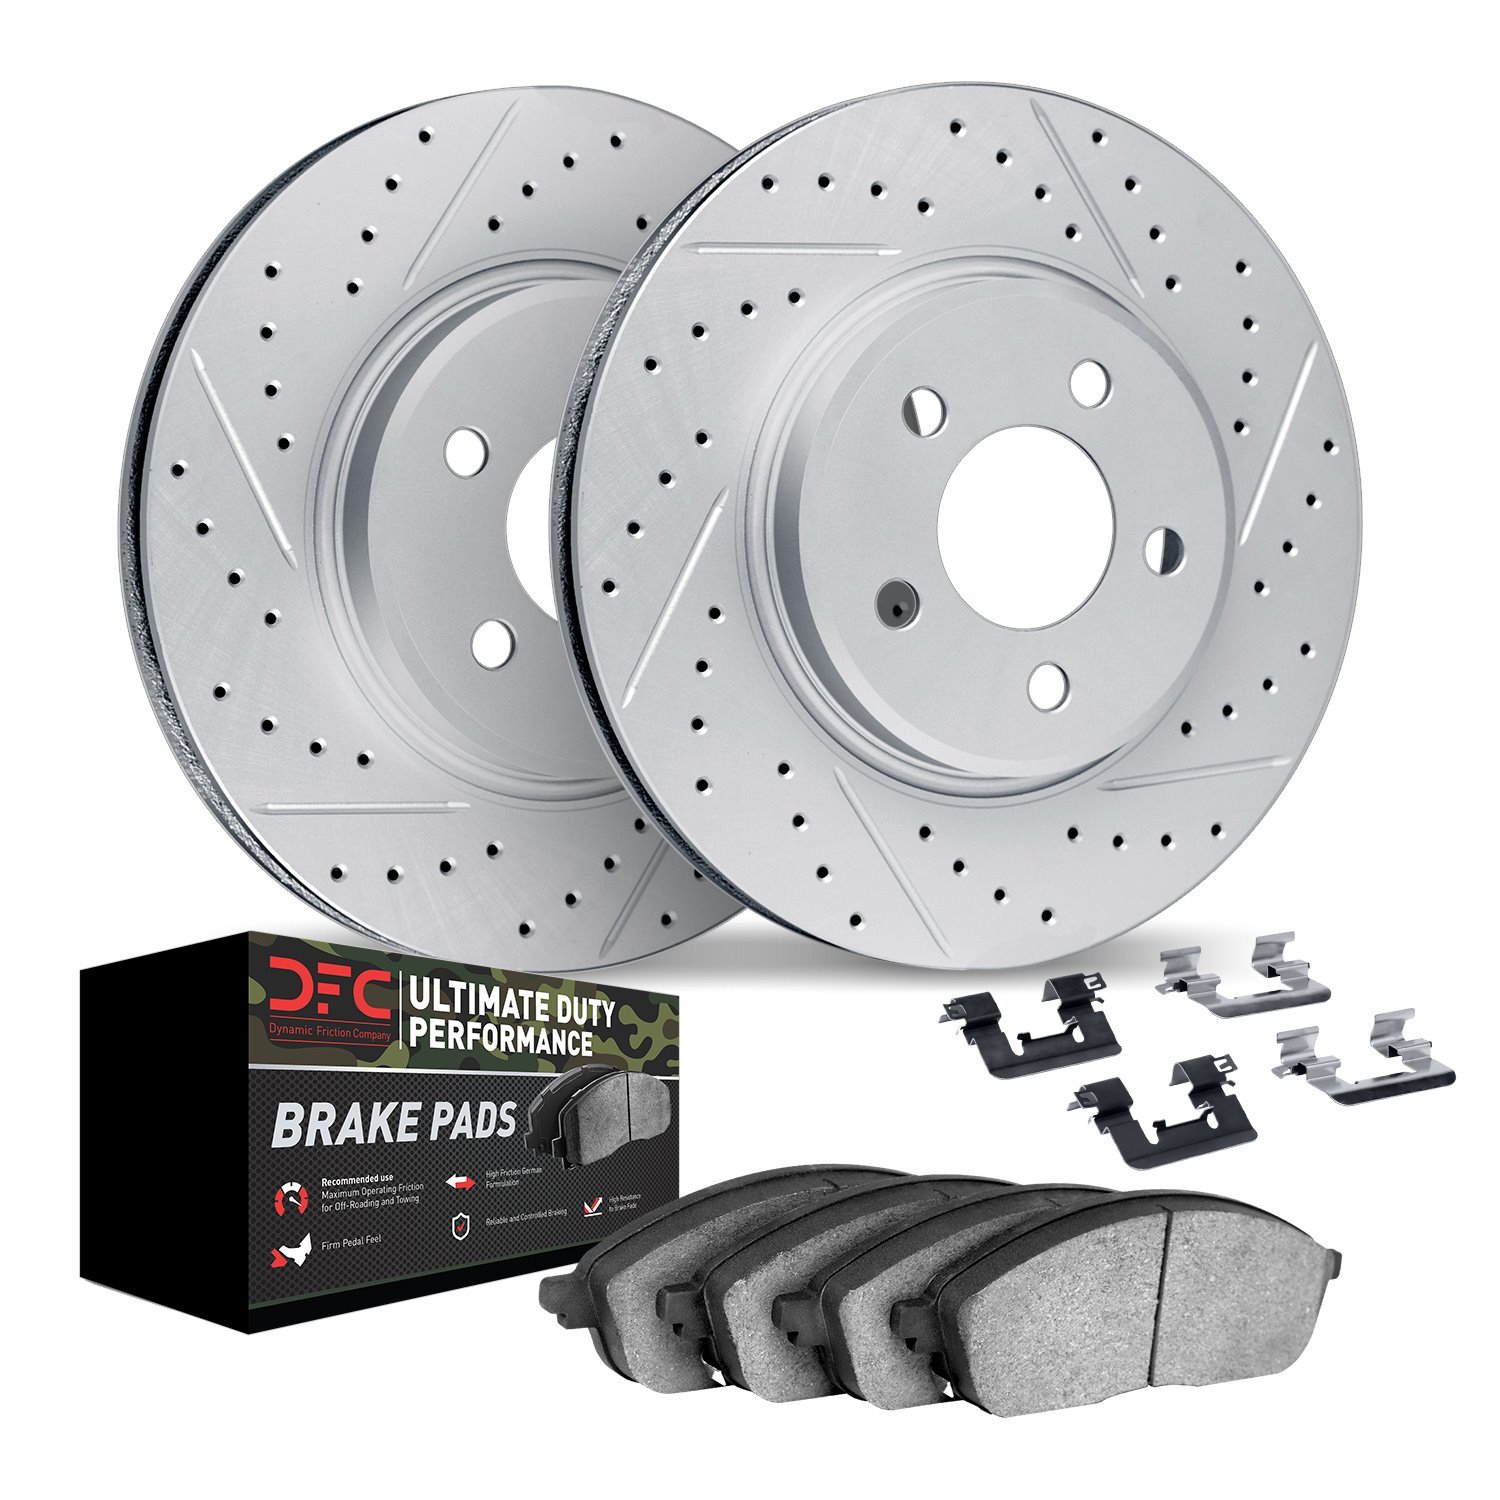 2412-42016 Geoperformance Drilled/Slotted Brake Rotors with Ultimate-Duty Brake Pads Kit & Hardware, Fits Select Mopar, Position